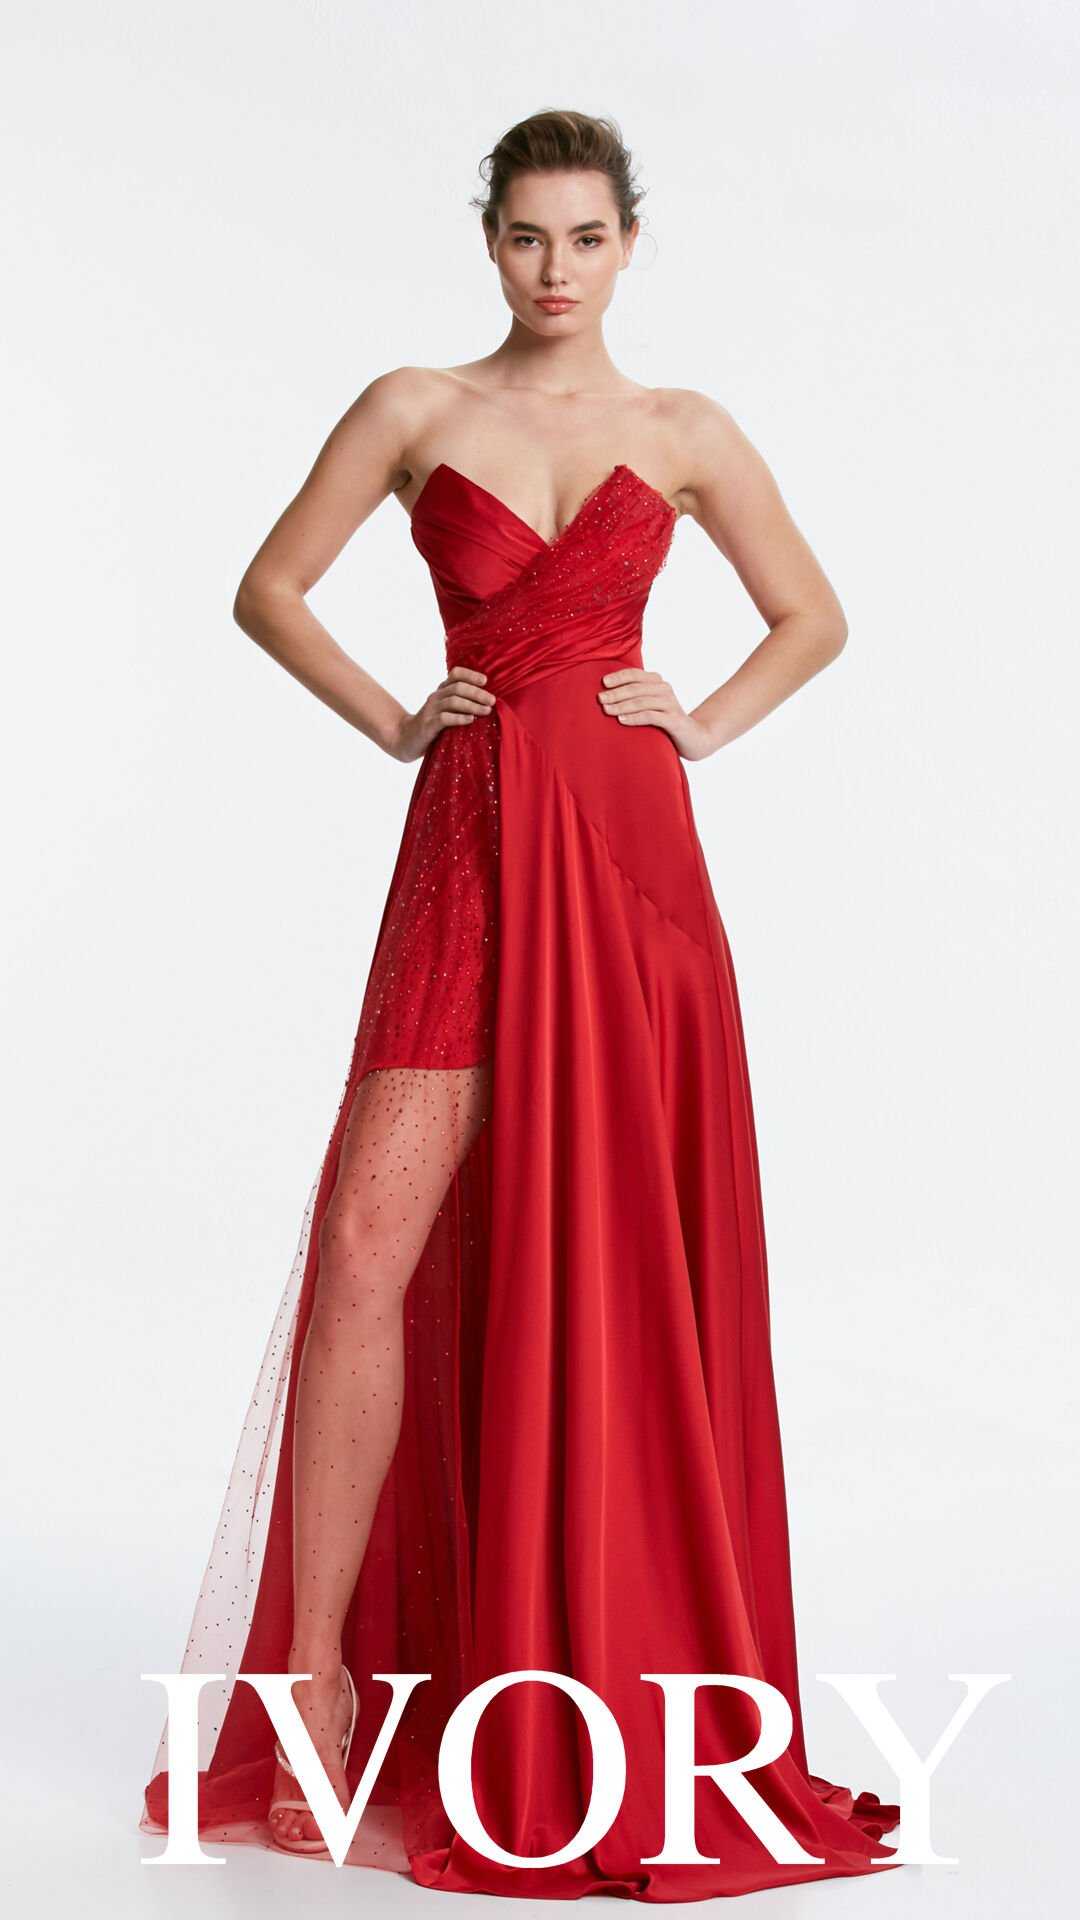 Frau mit einem elegante rotem Abendkleid